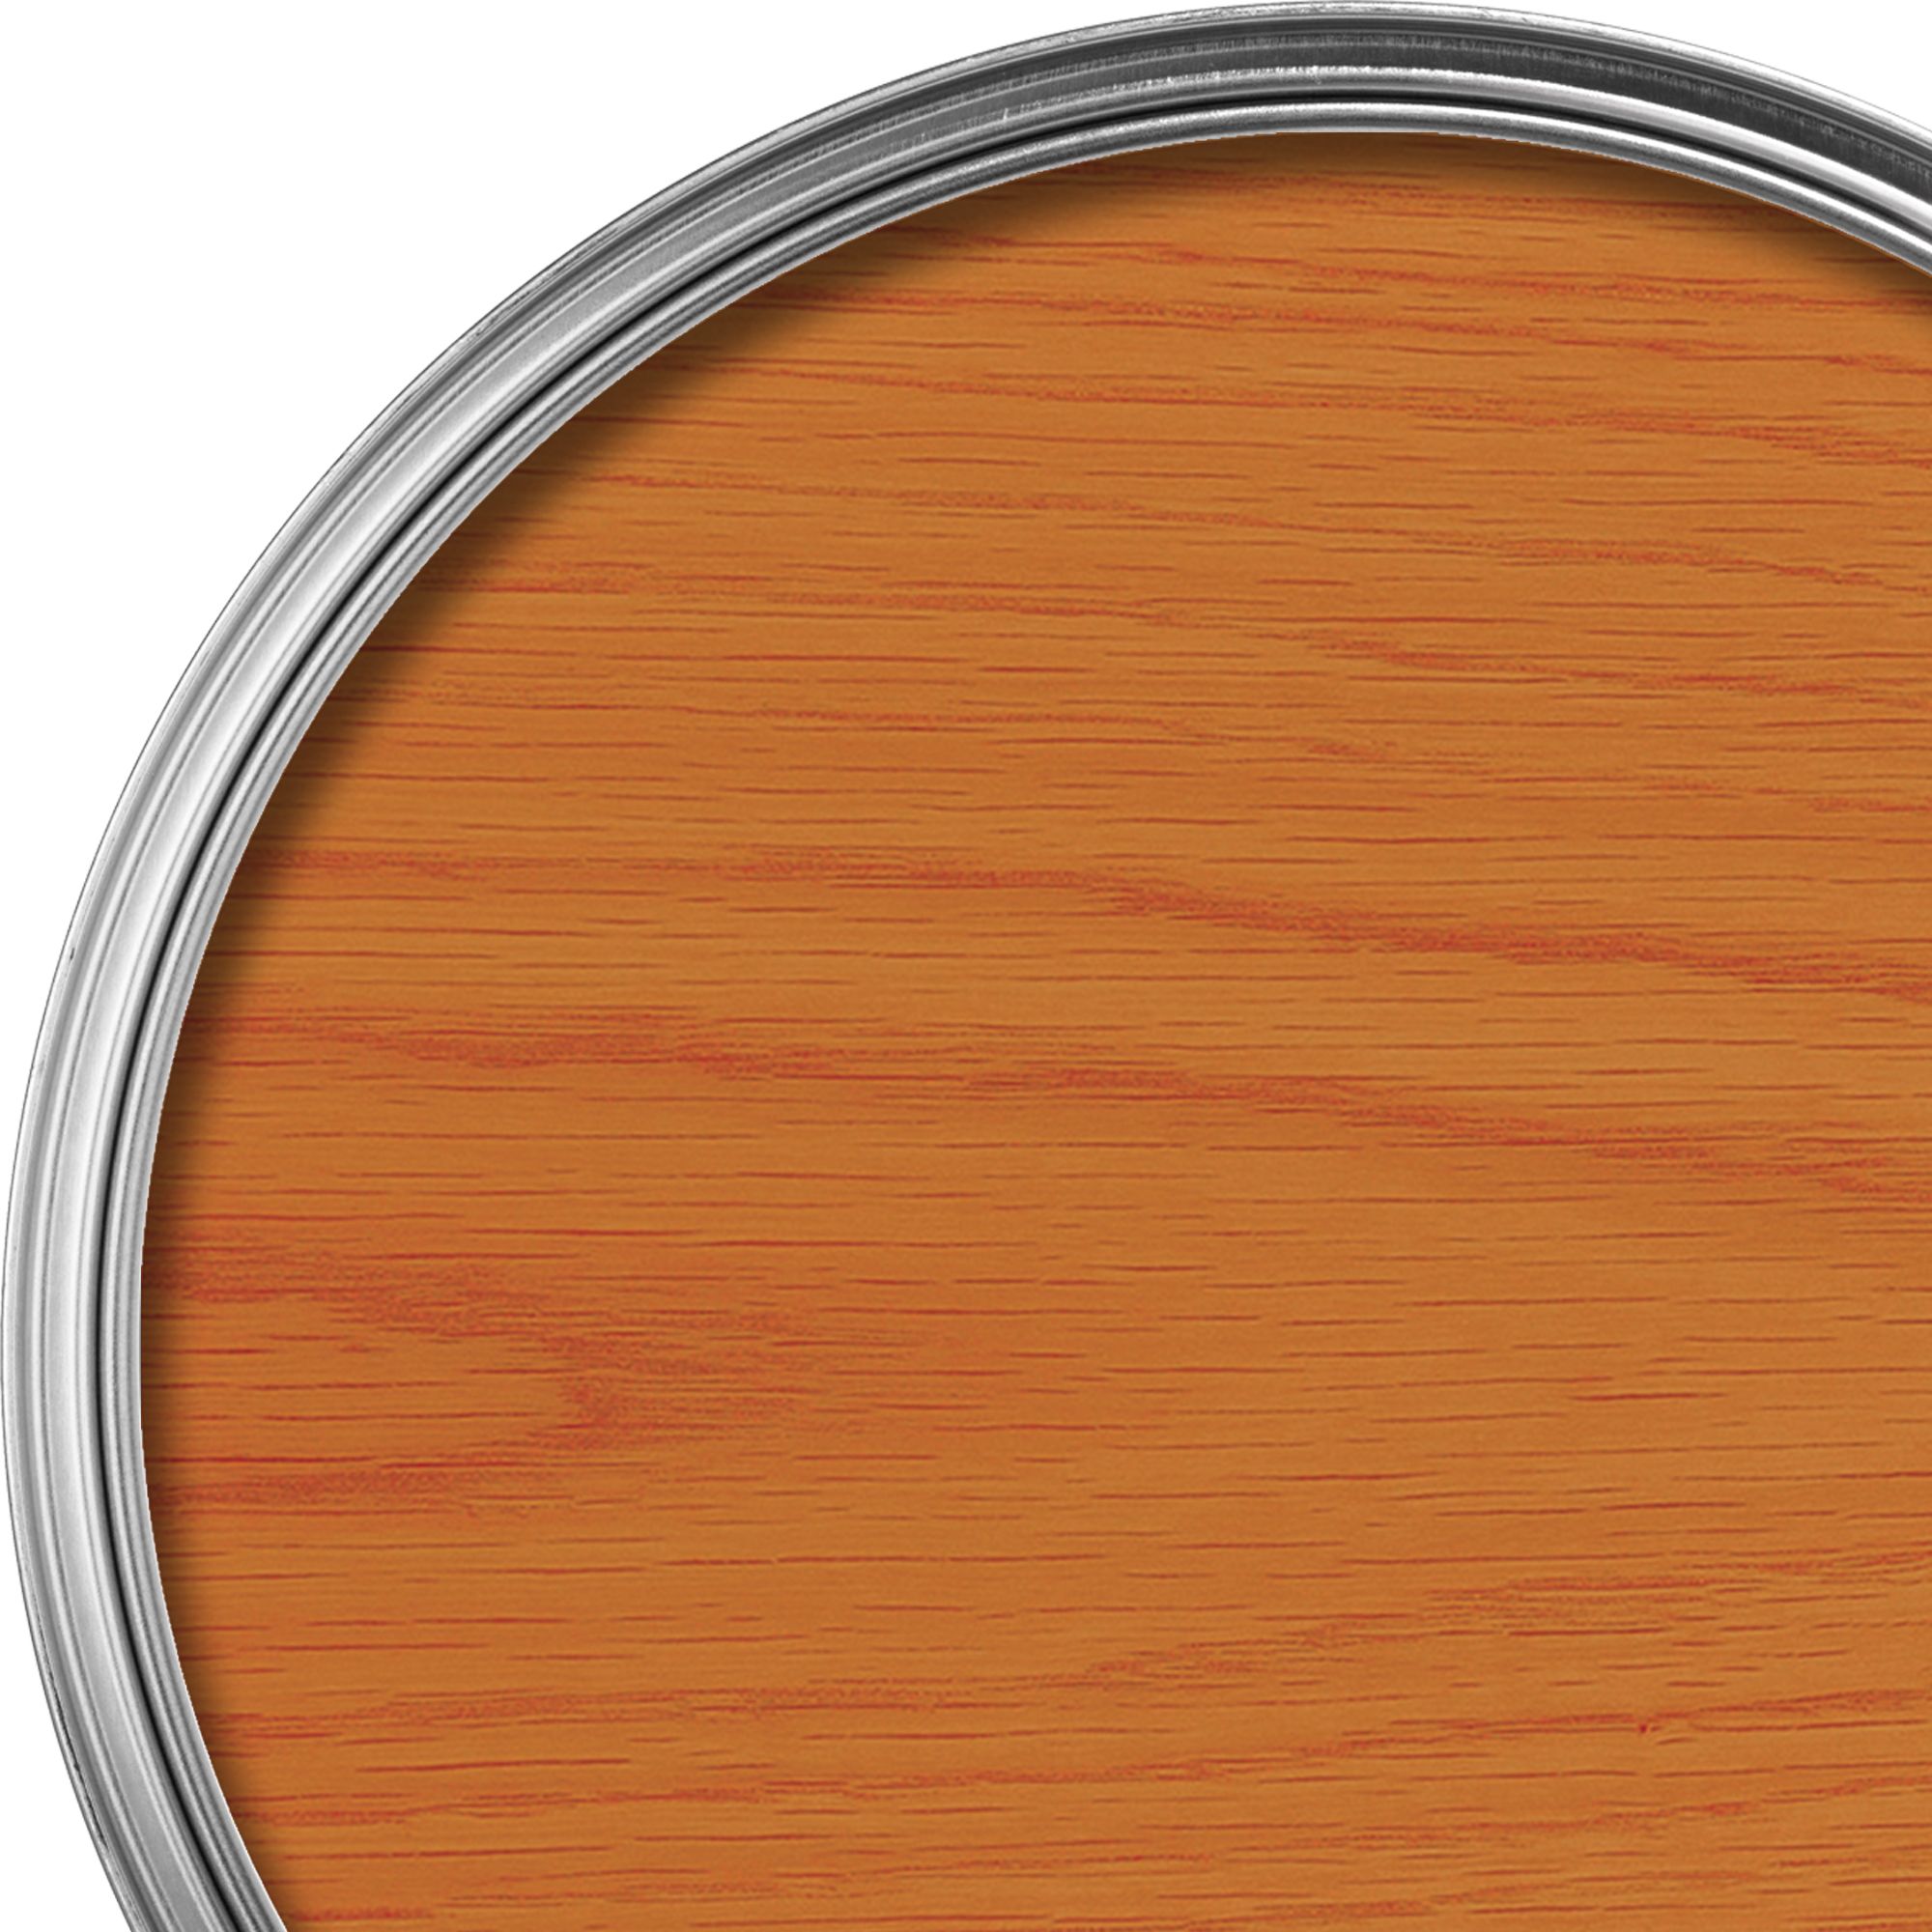 GoodHome Medium Oak Satin Floor Wood varnish, 2.5L